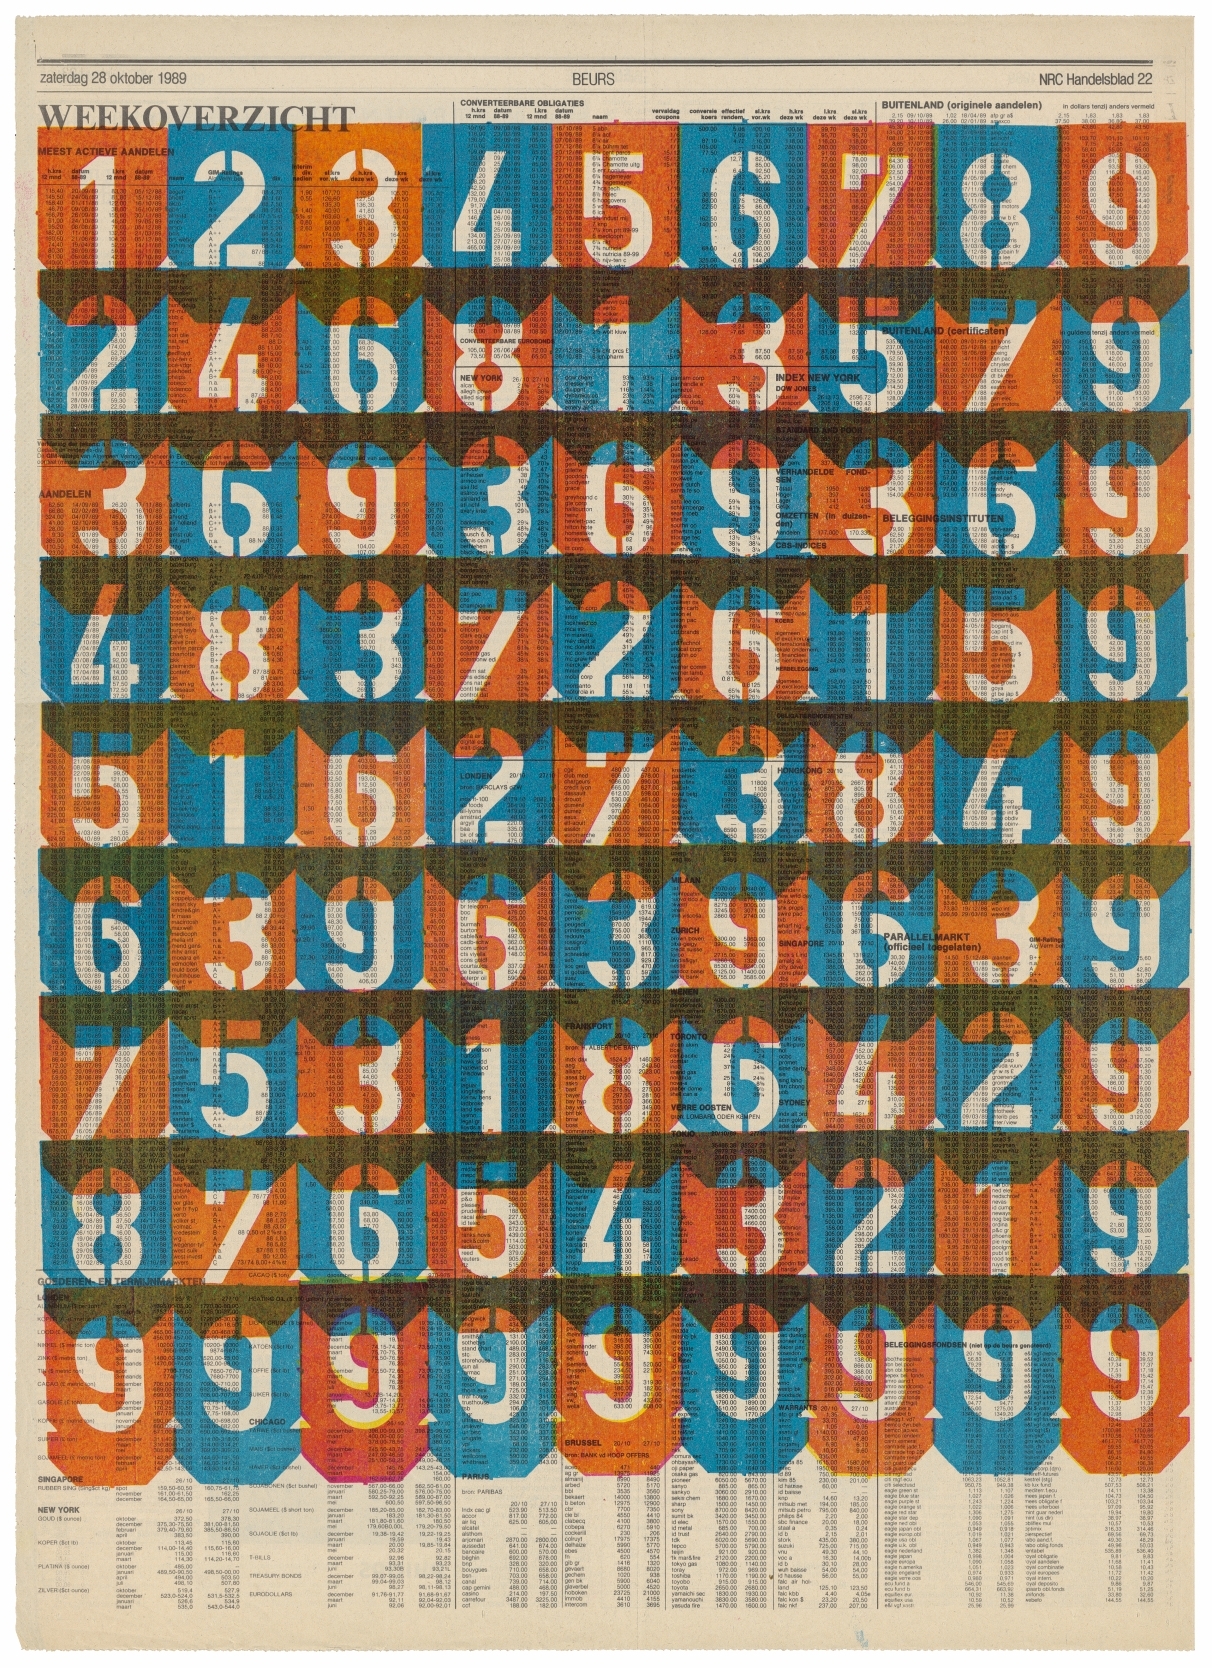 Karel Martens作品13-Magical Square, monoprint 舊報紙, 1